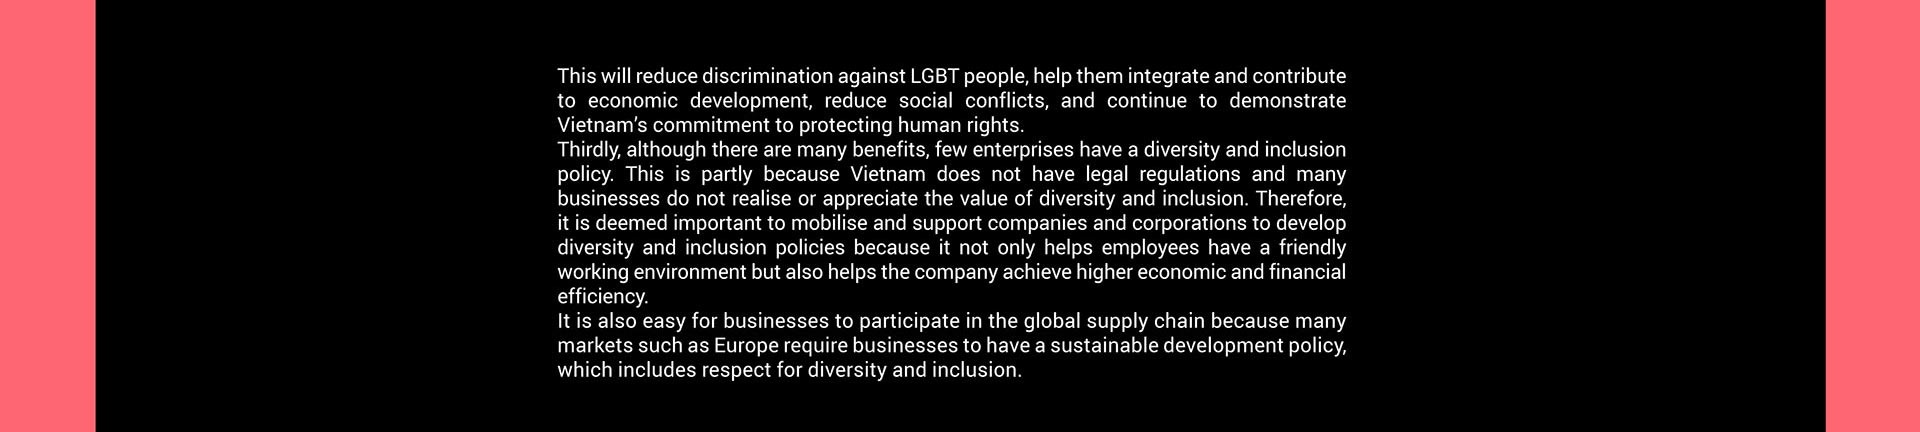 Bringing benefits to business via diversity policies (Emagazine)